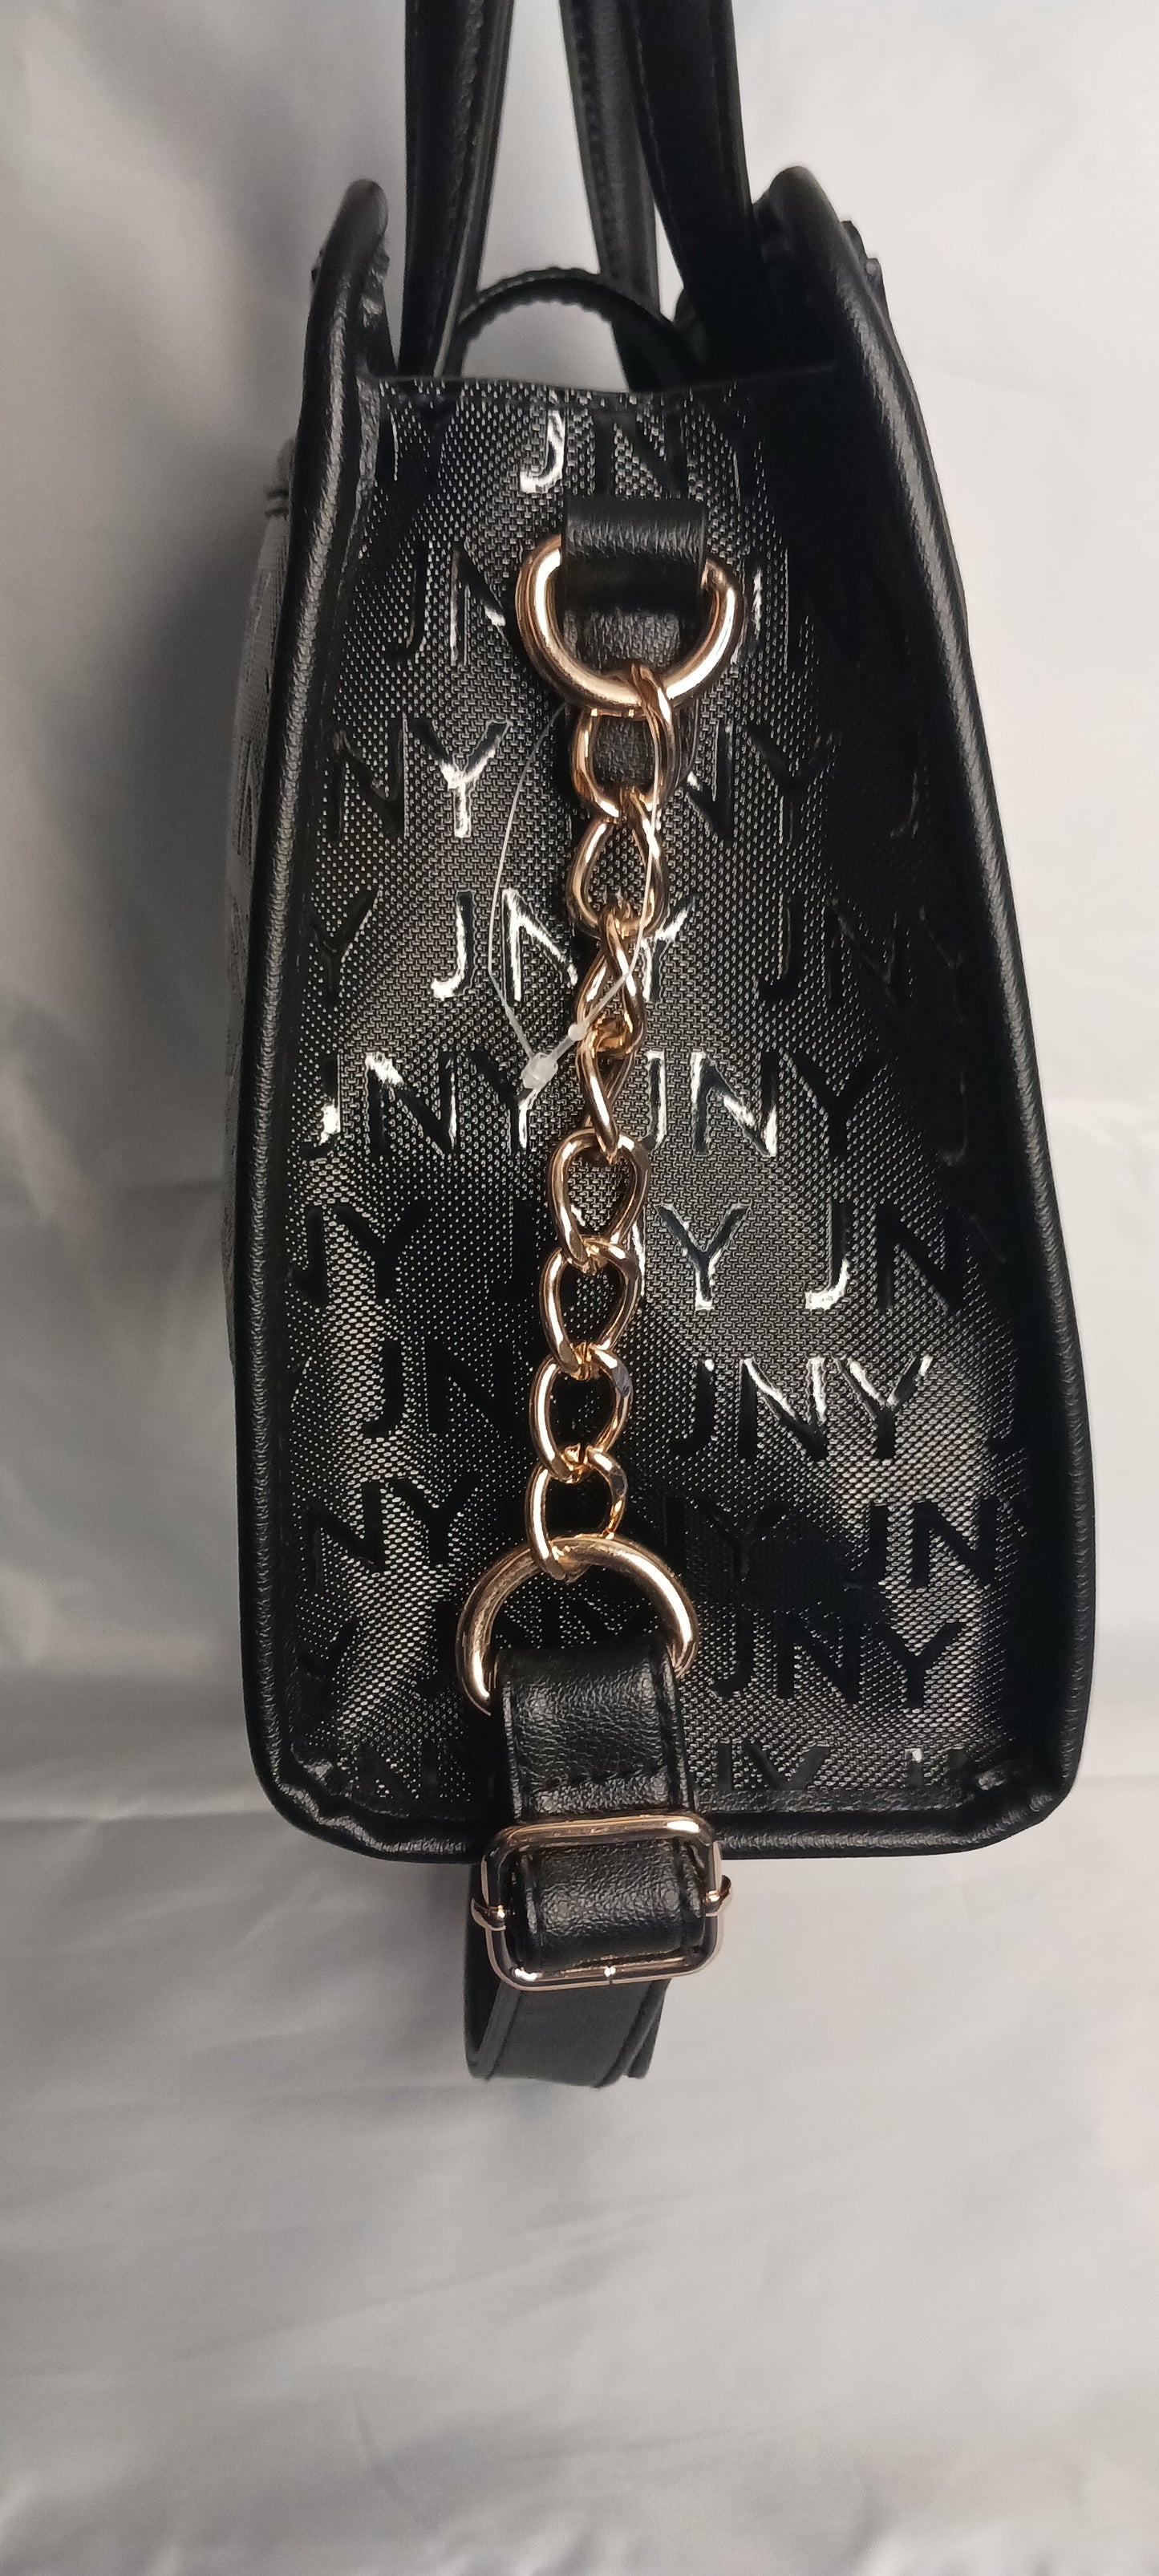 New Jones New York purse